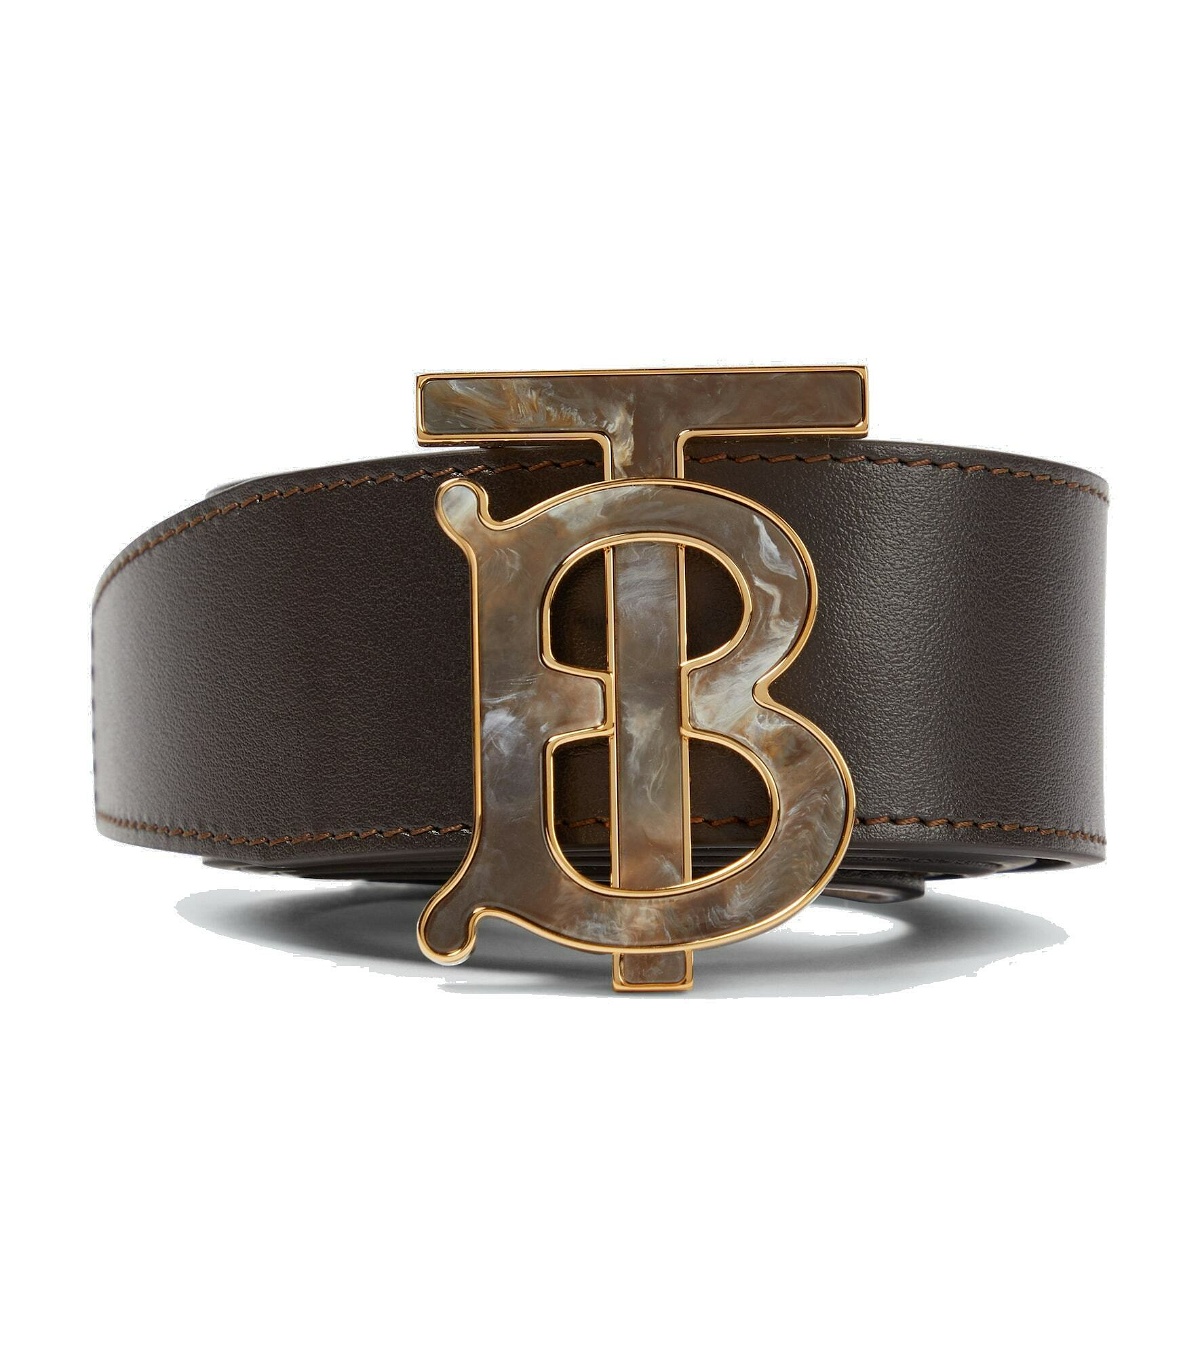 Burberry - TB leather belt Burberry